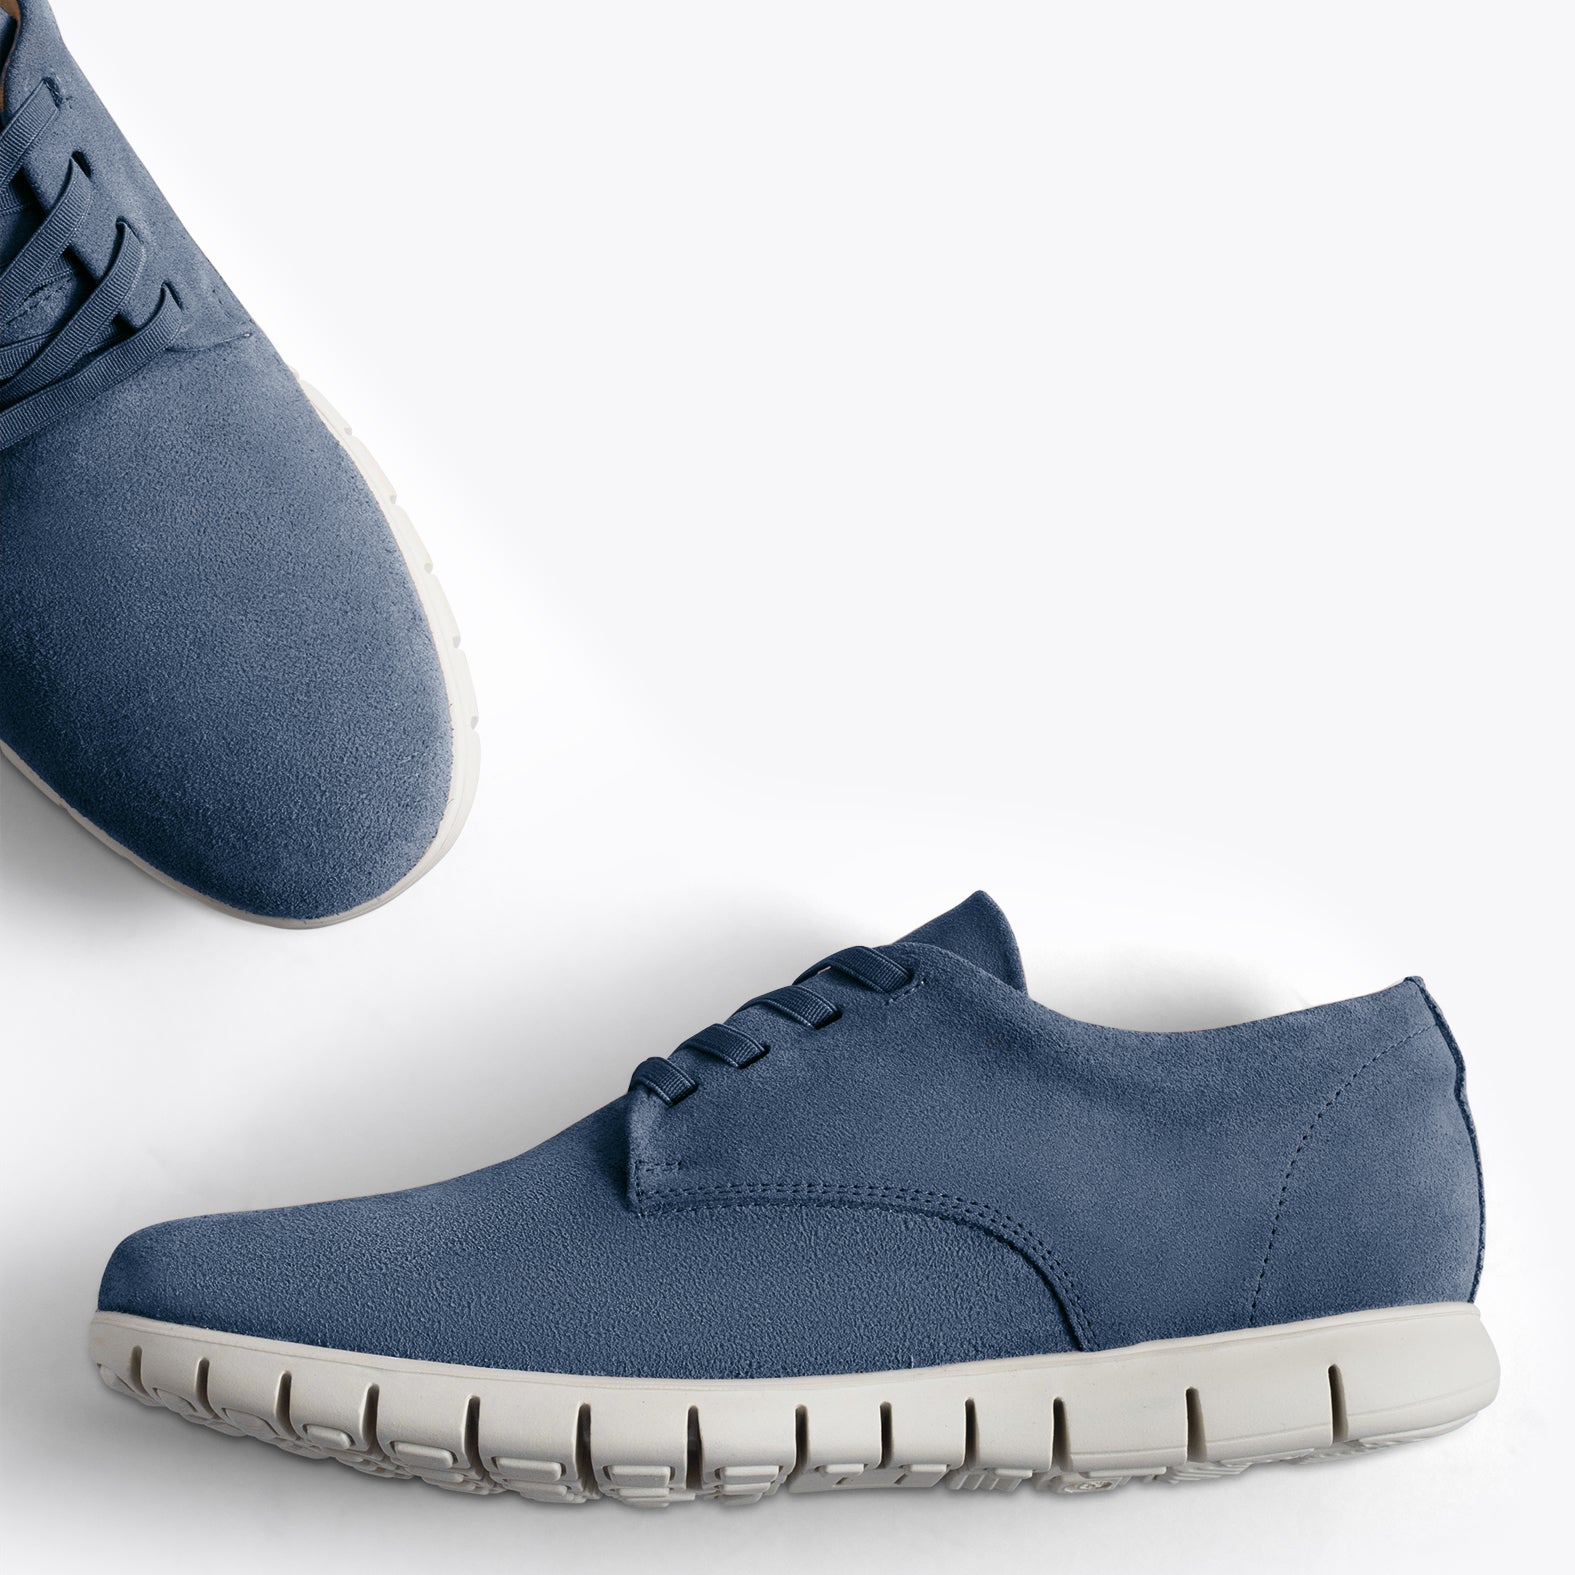 360 – BLUE sport shoes for men